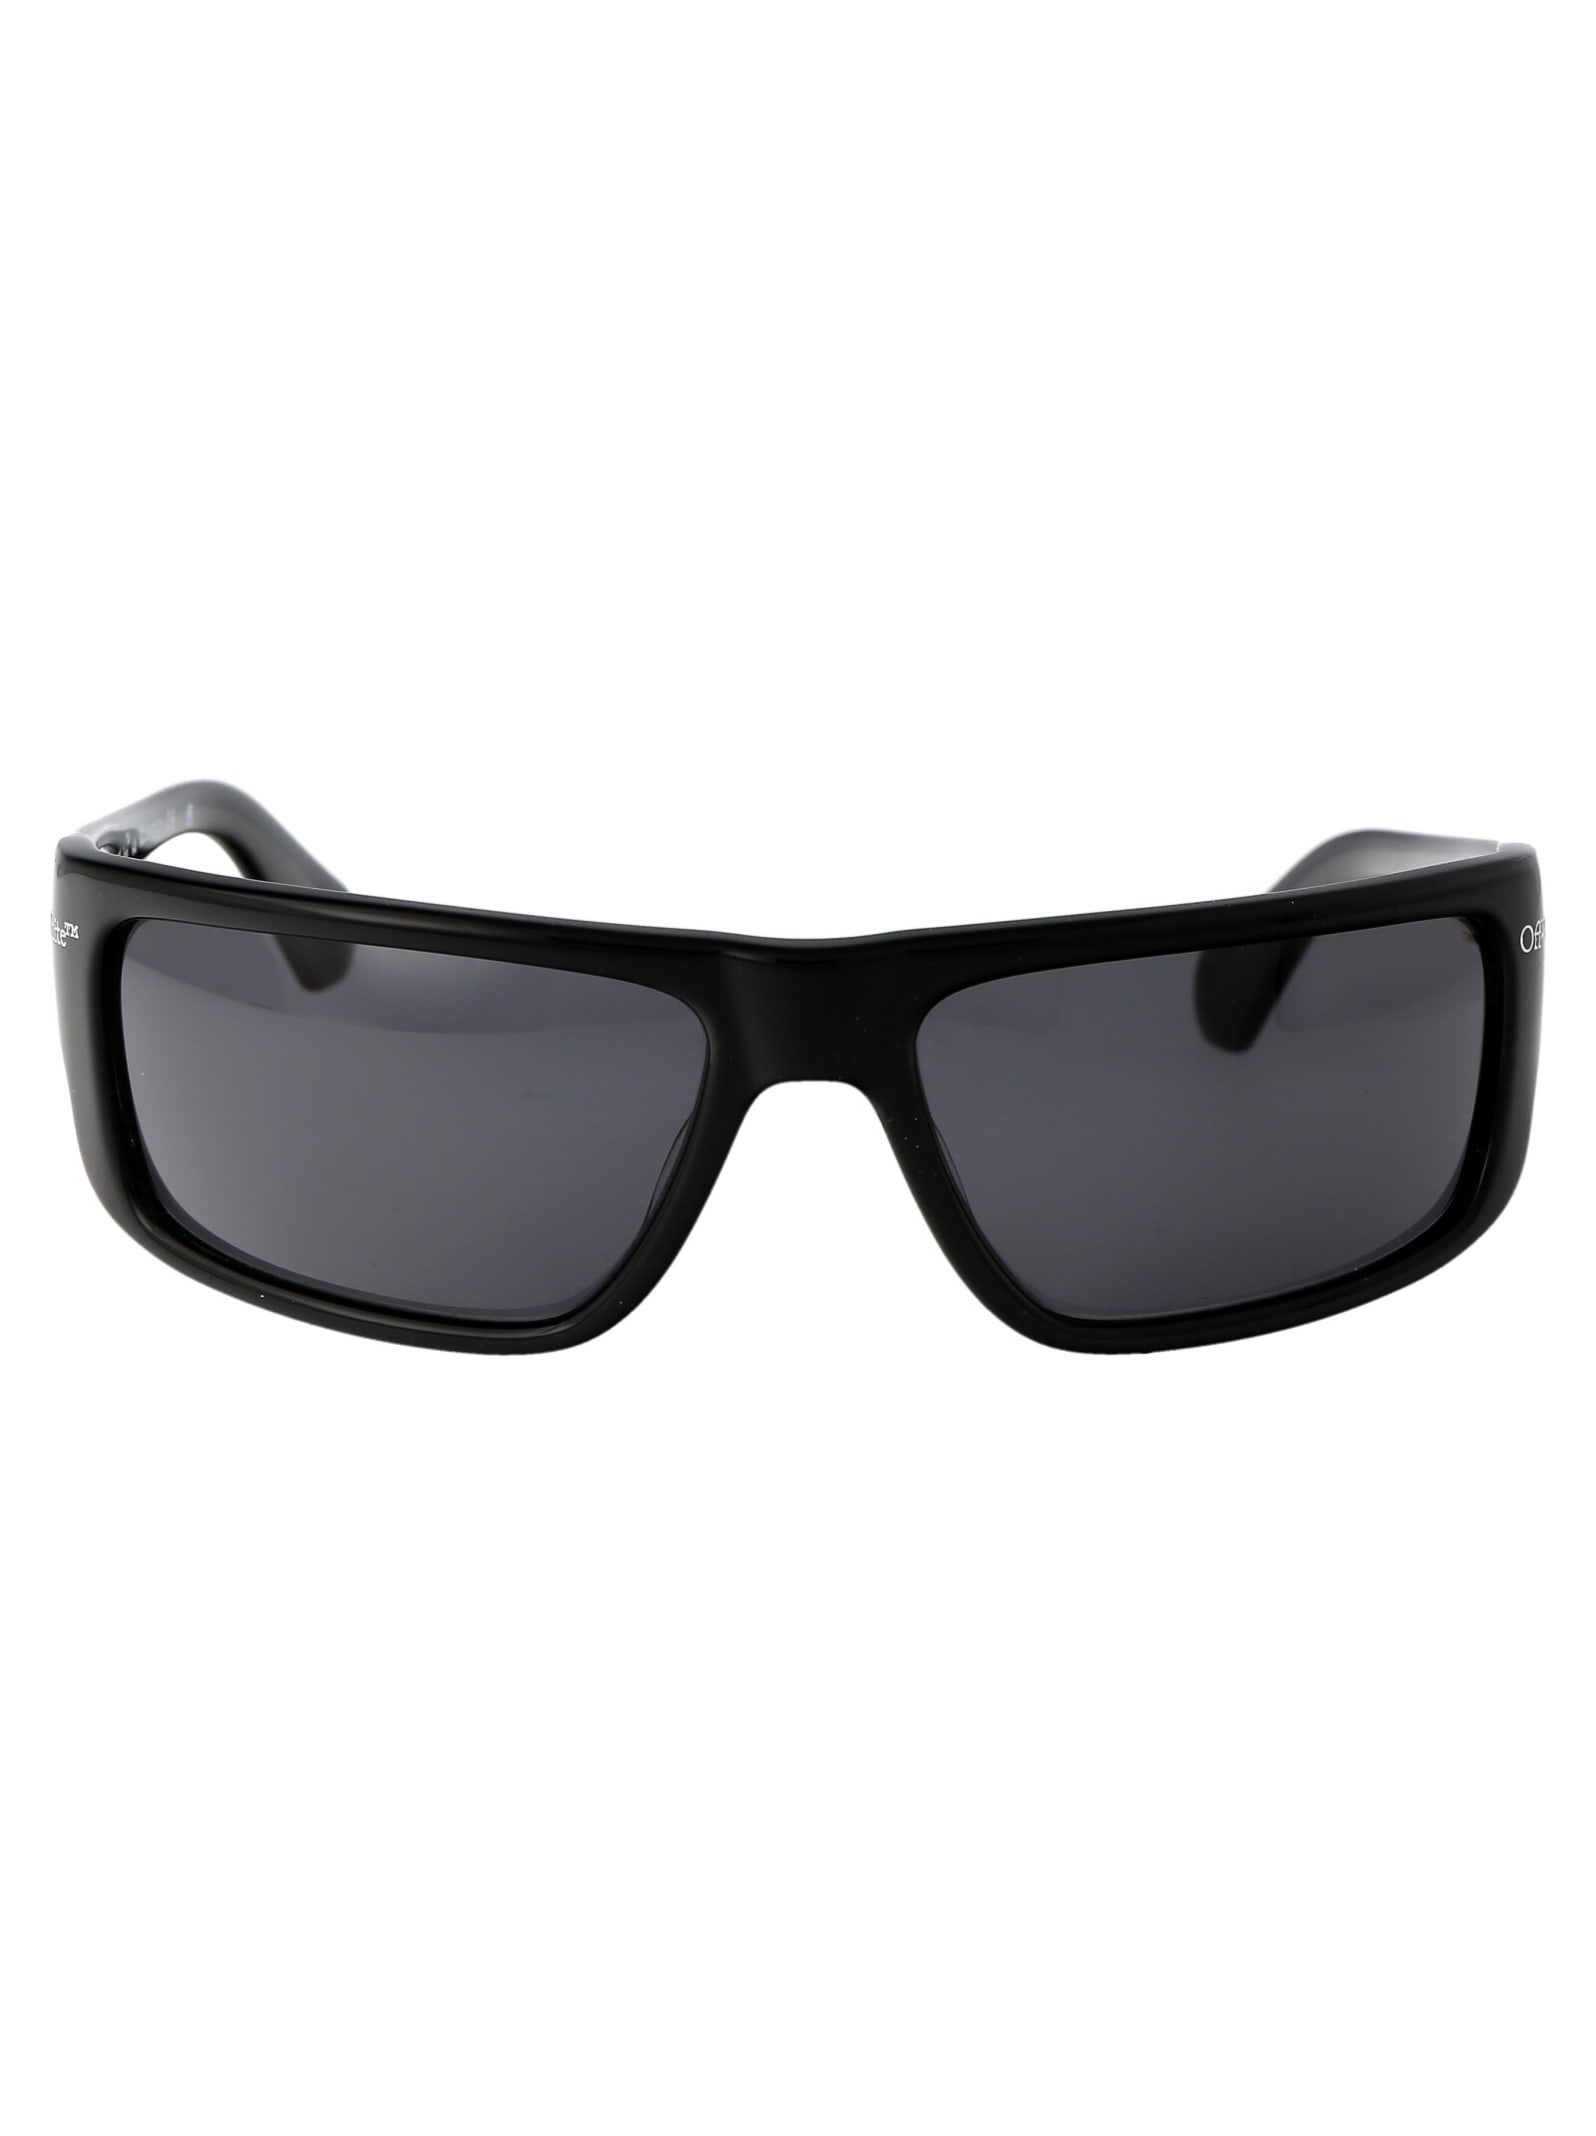 Off-White Bologna Rectangular Frame Sunglasses